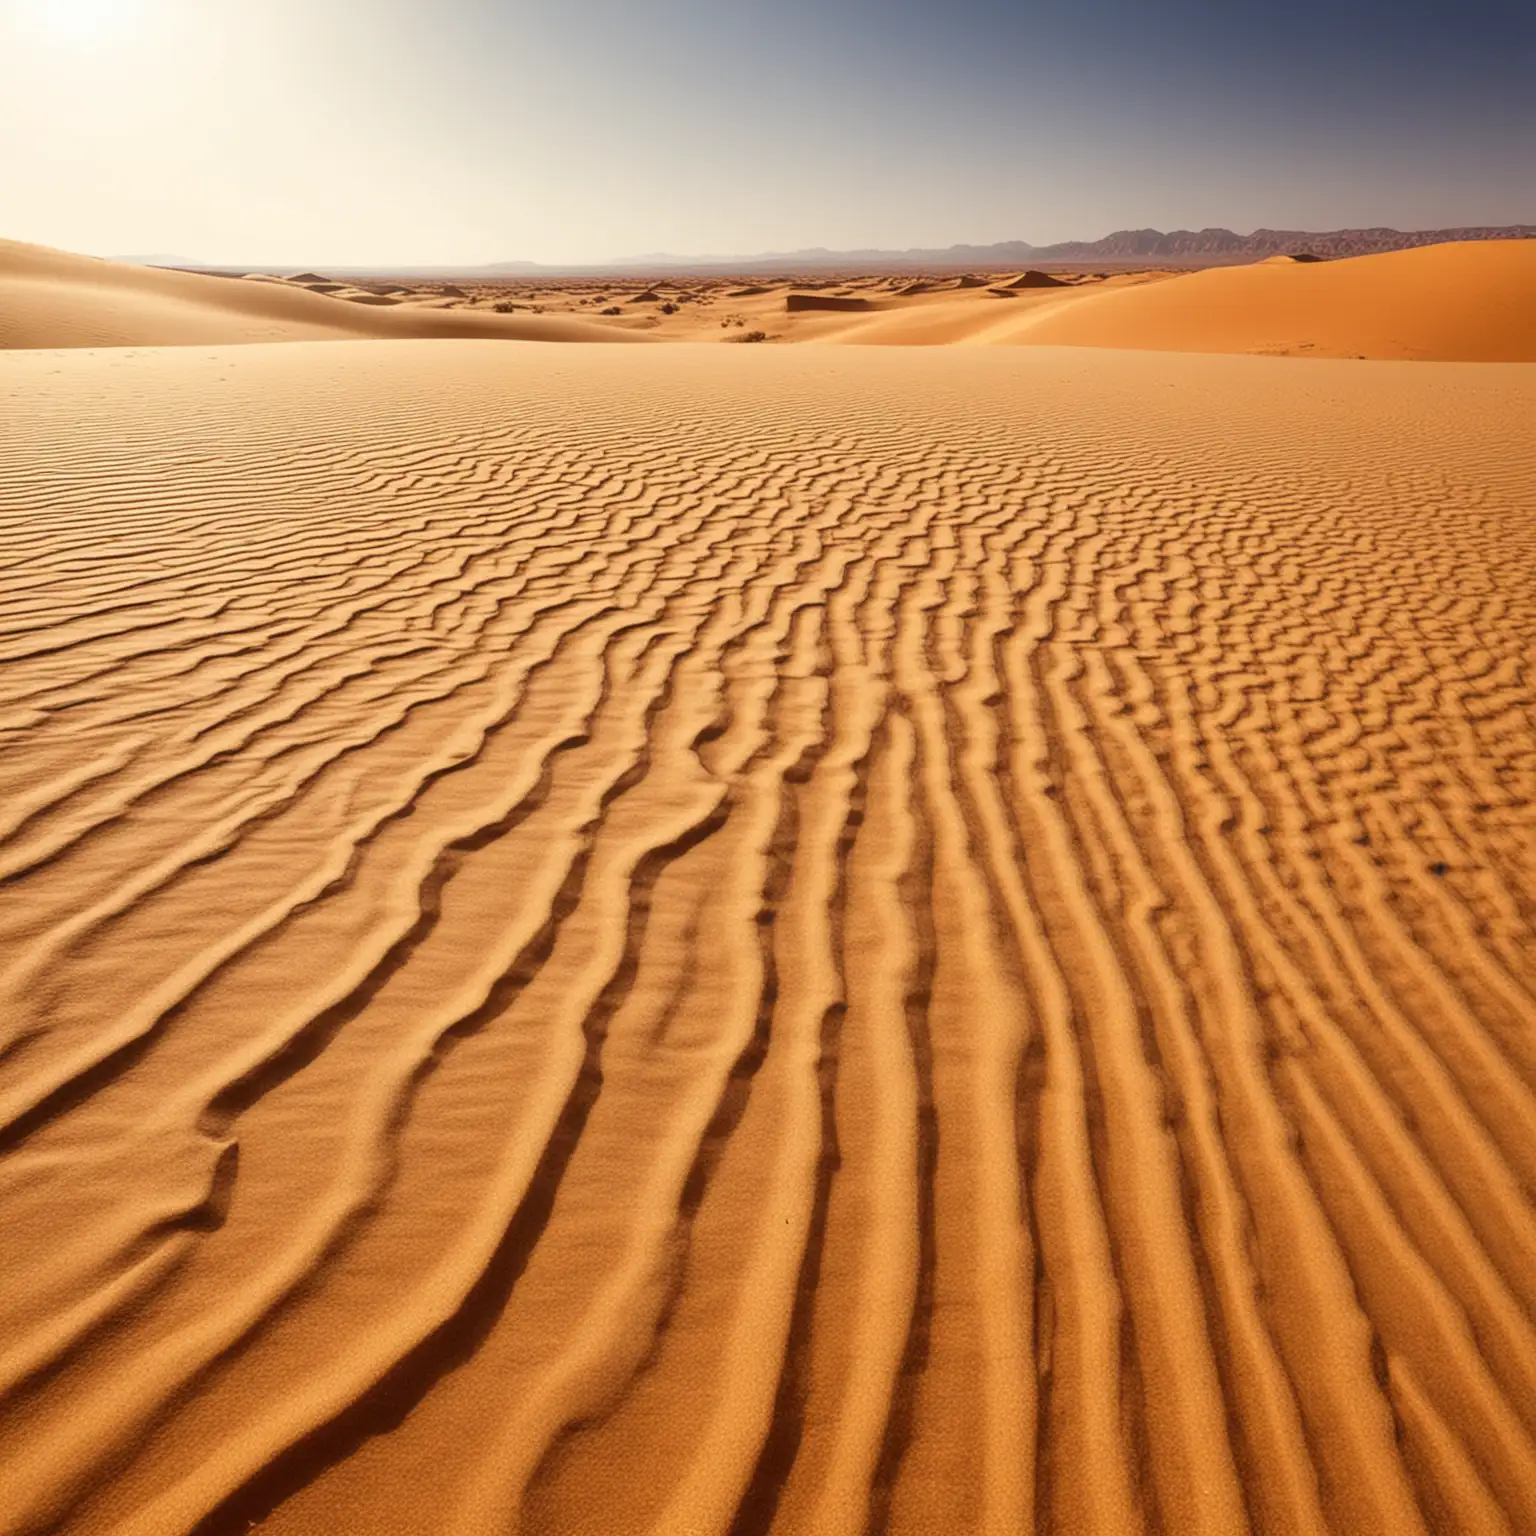 Vast and Arid Sahara Desert Landscape with Rippling Sand Dunes